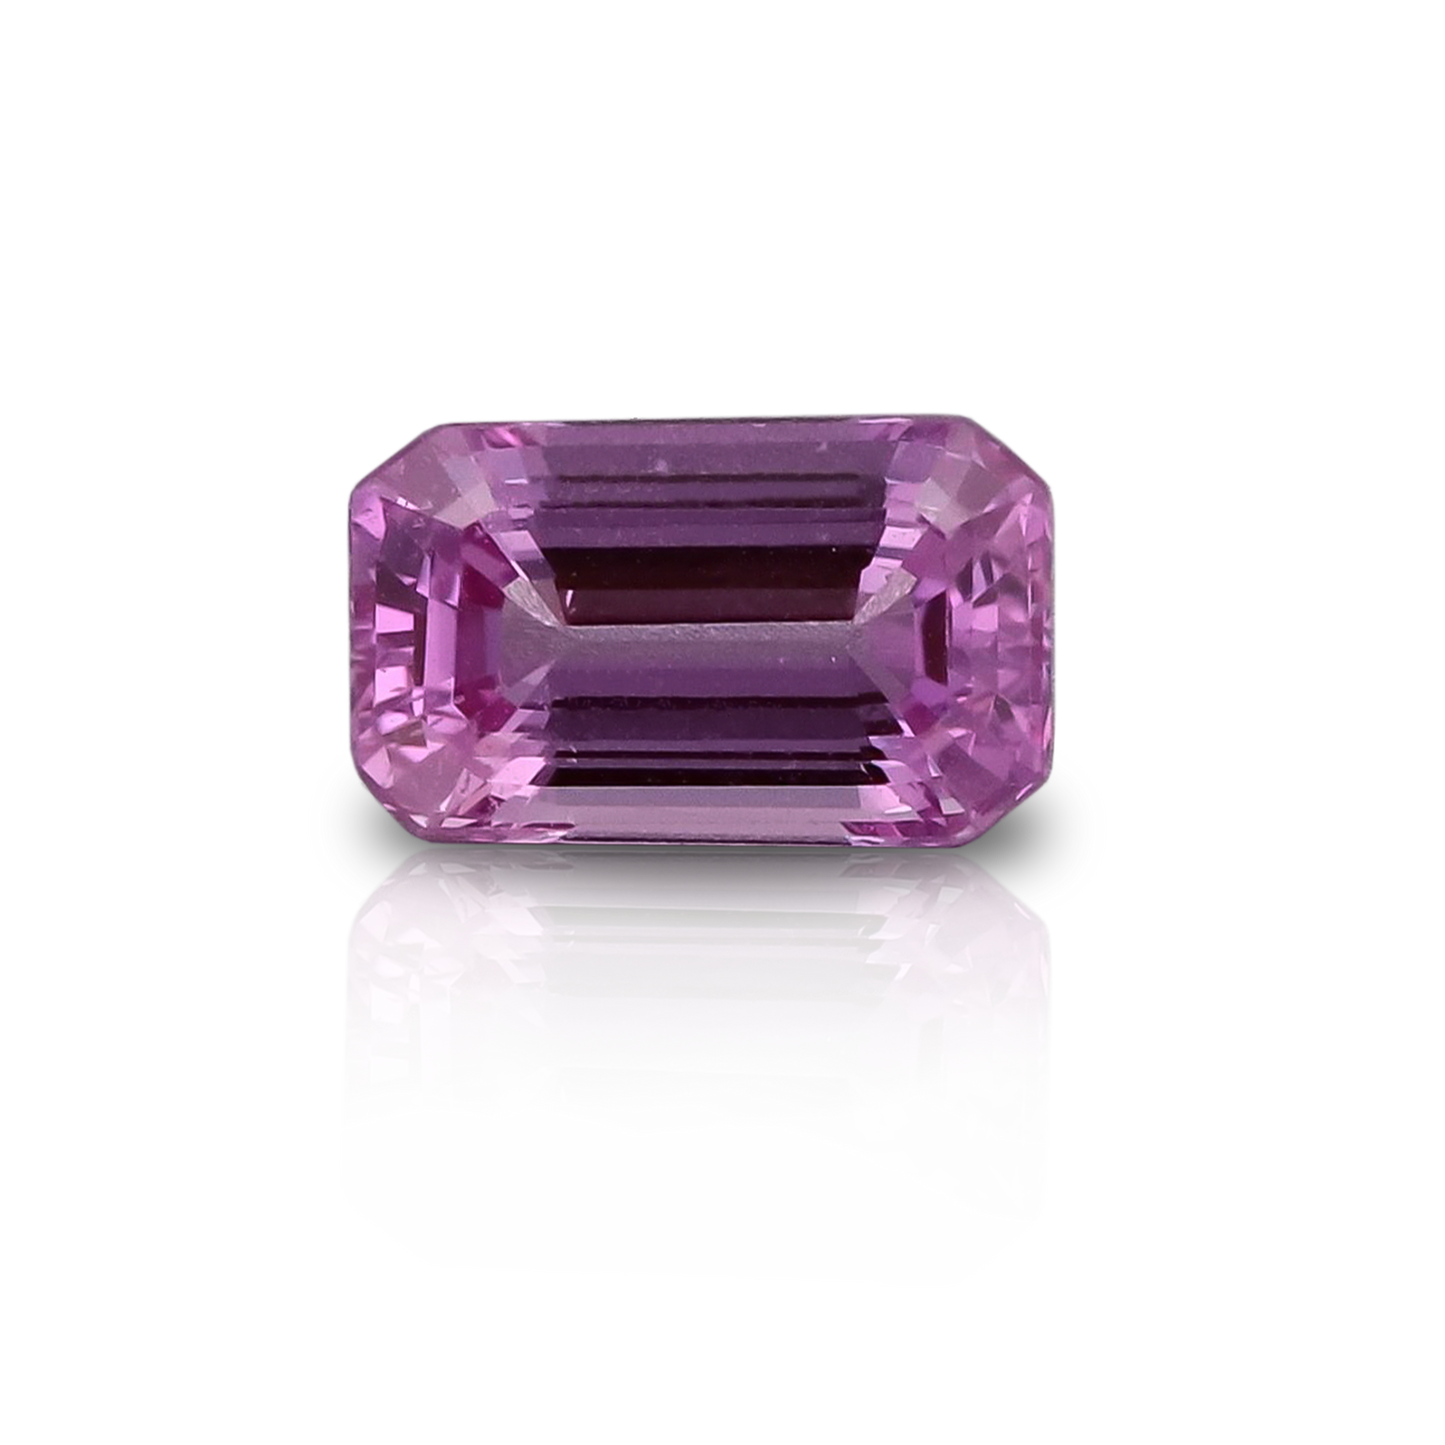 Natural Pink Sapphire 1.64 Carats